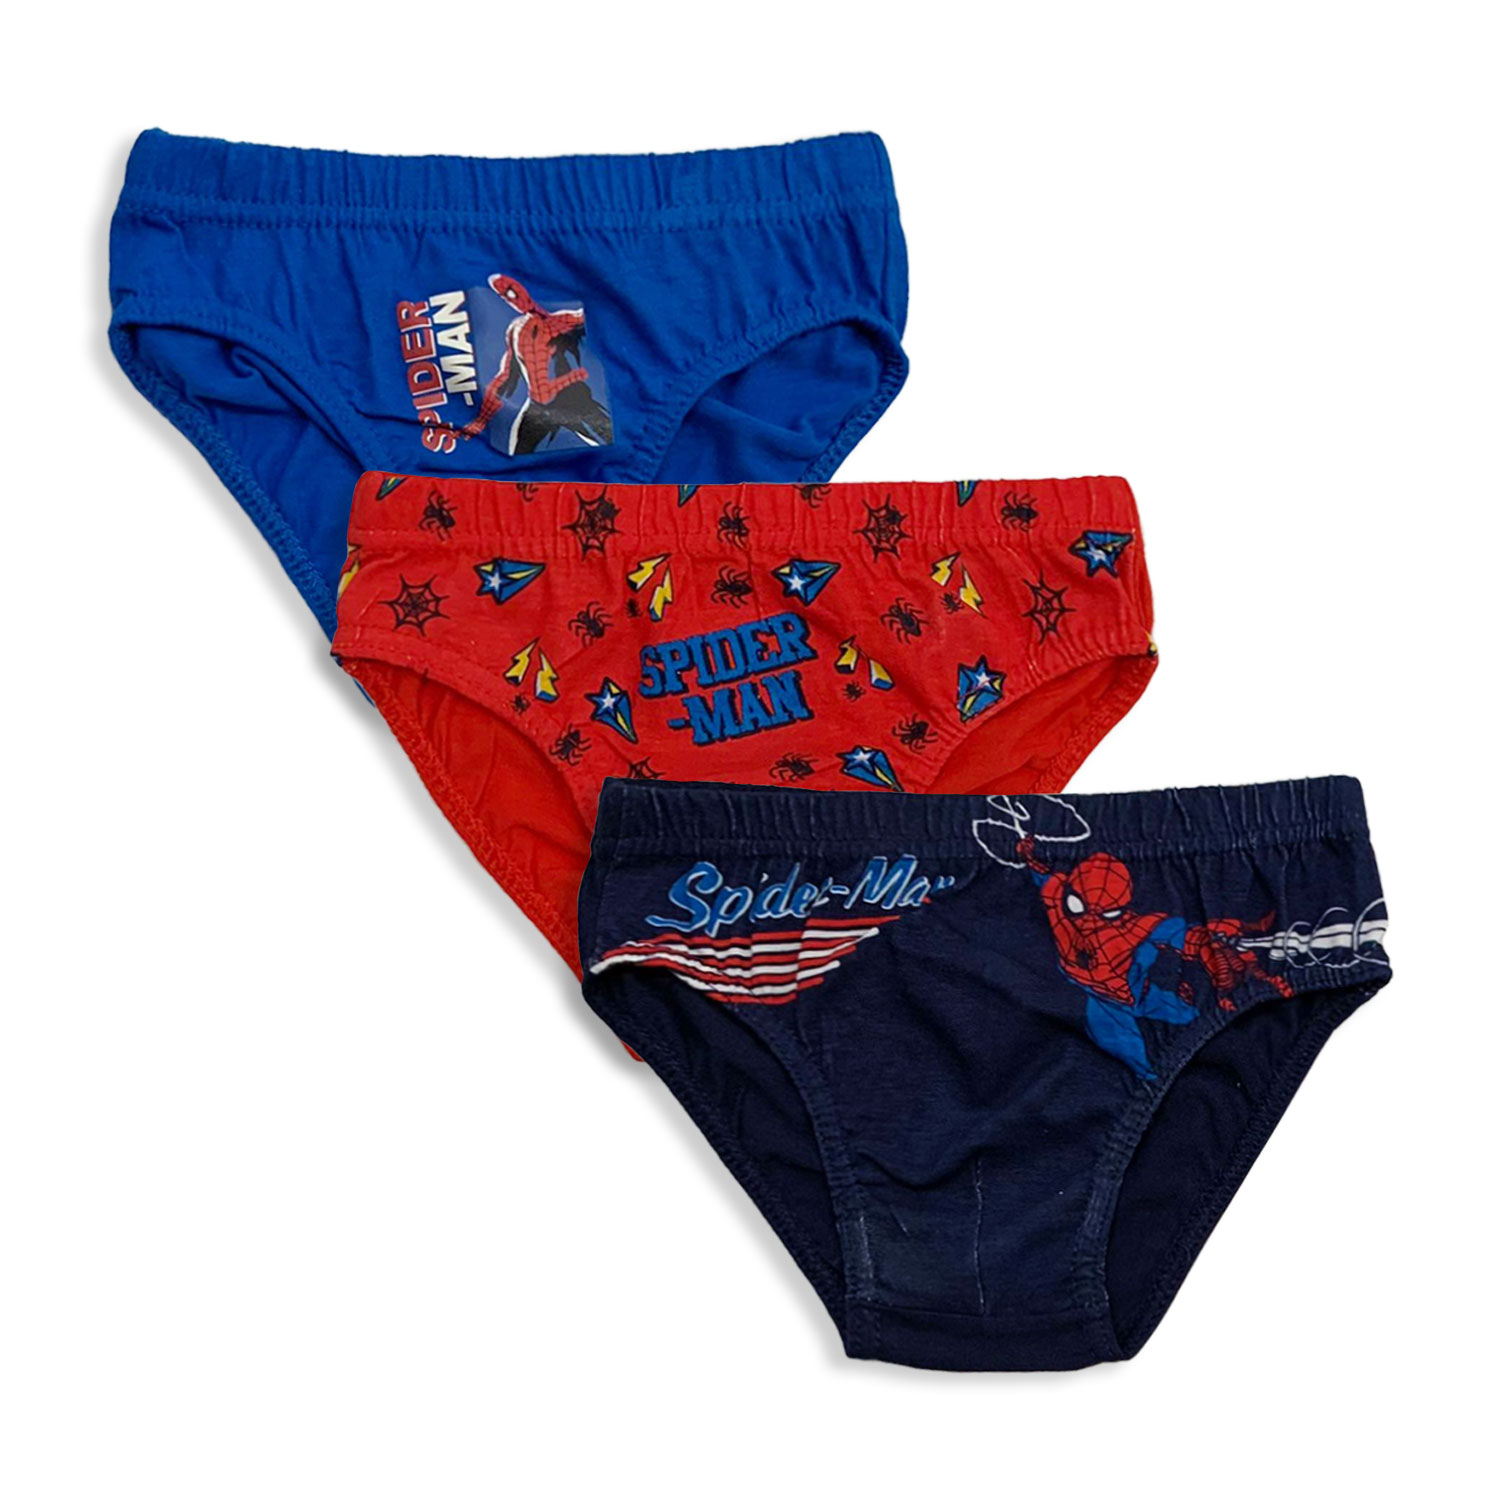 Set of 3 pieces of underwear 'Spiderman' - Bambinokids